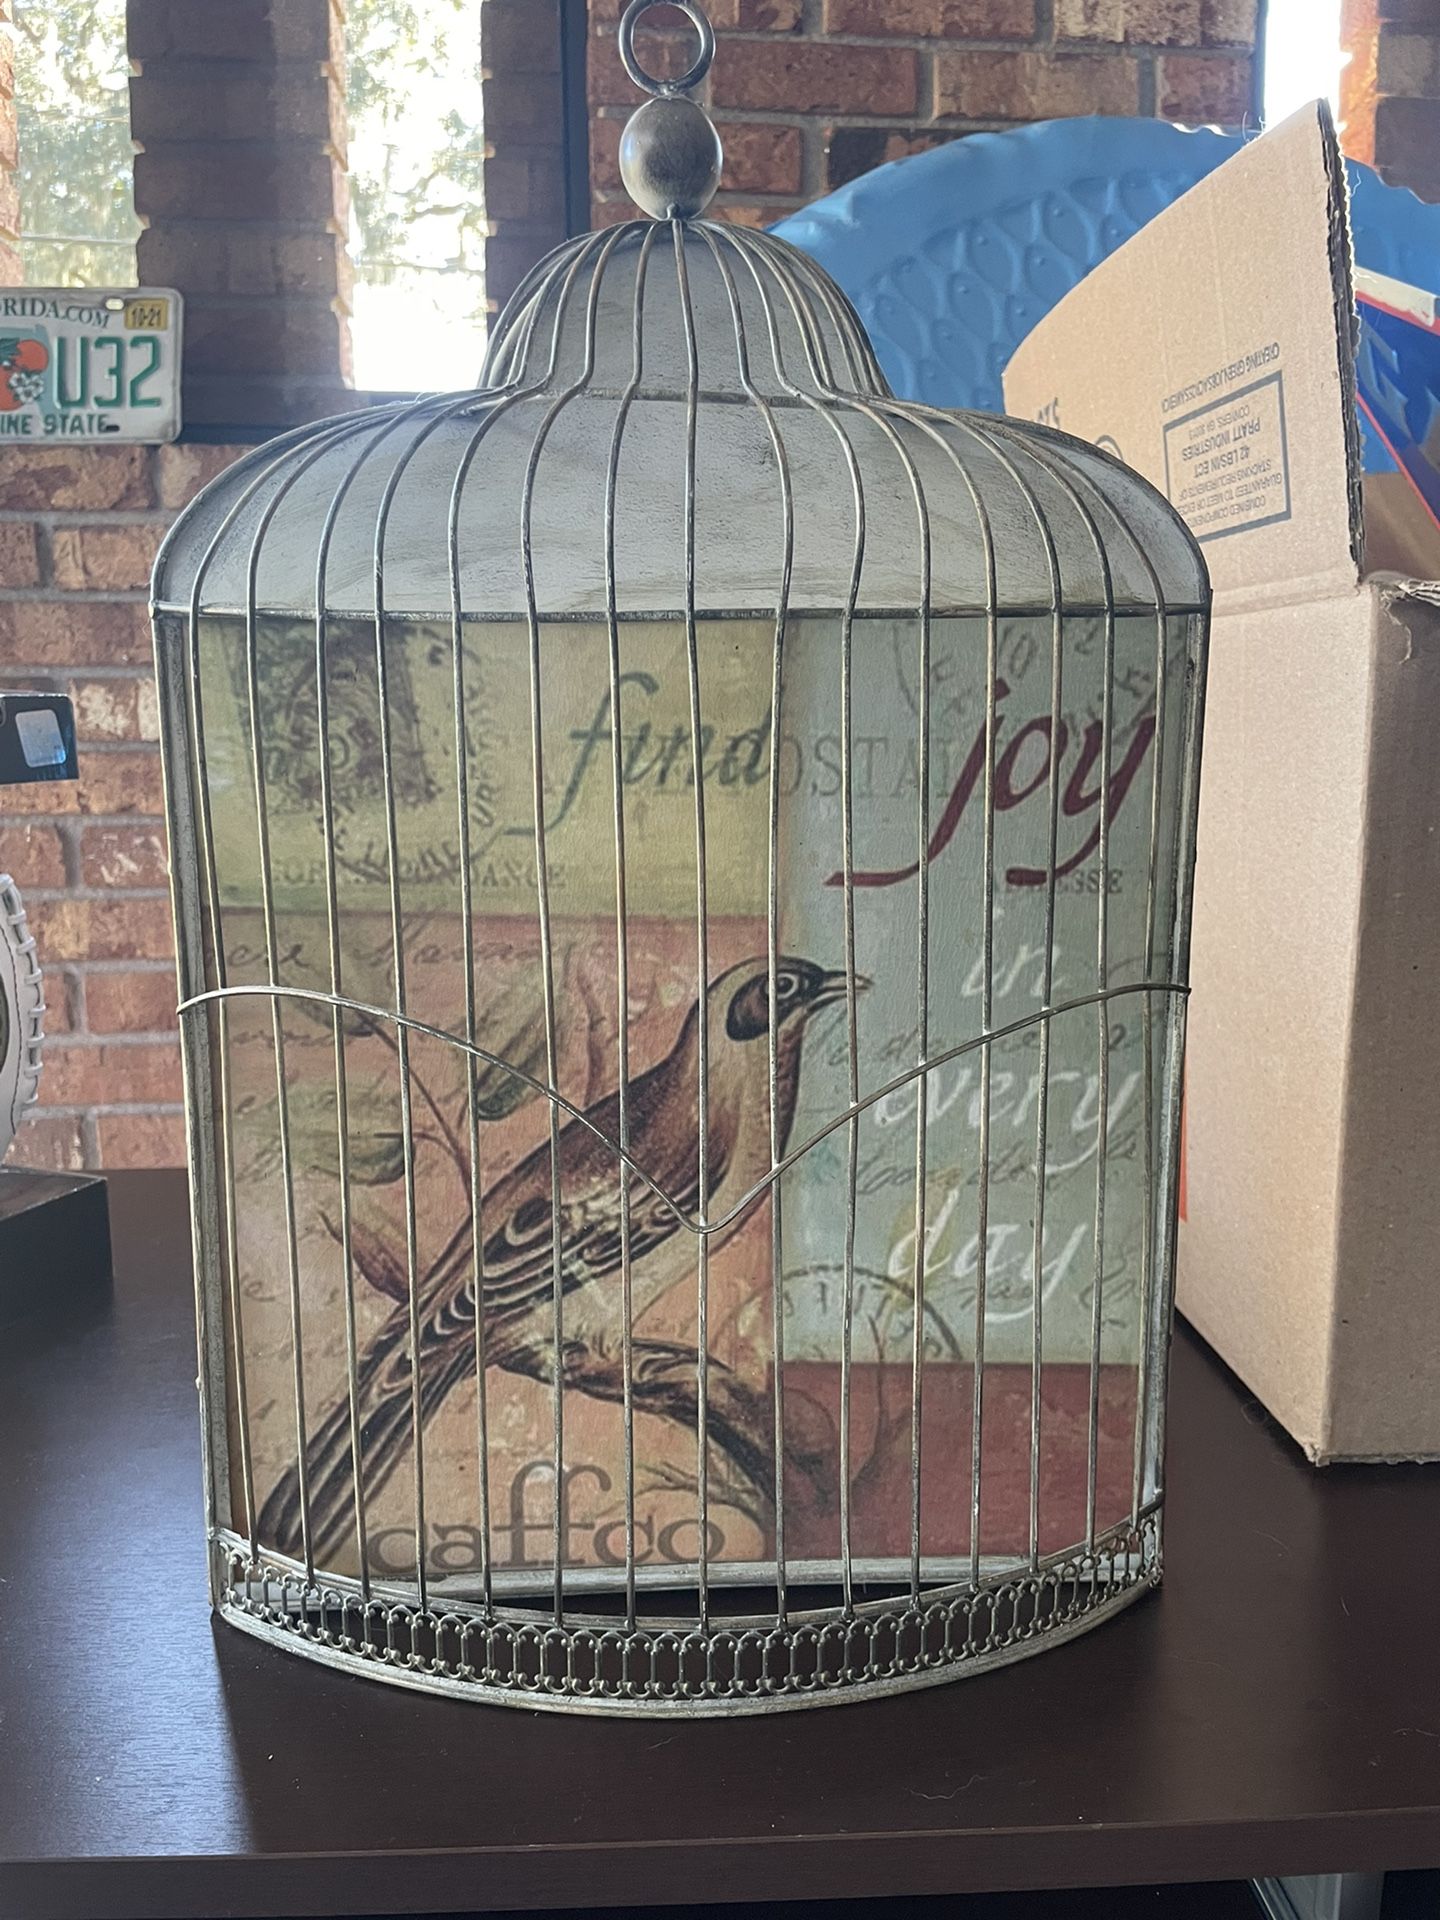 Bird Cage Decor